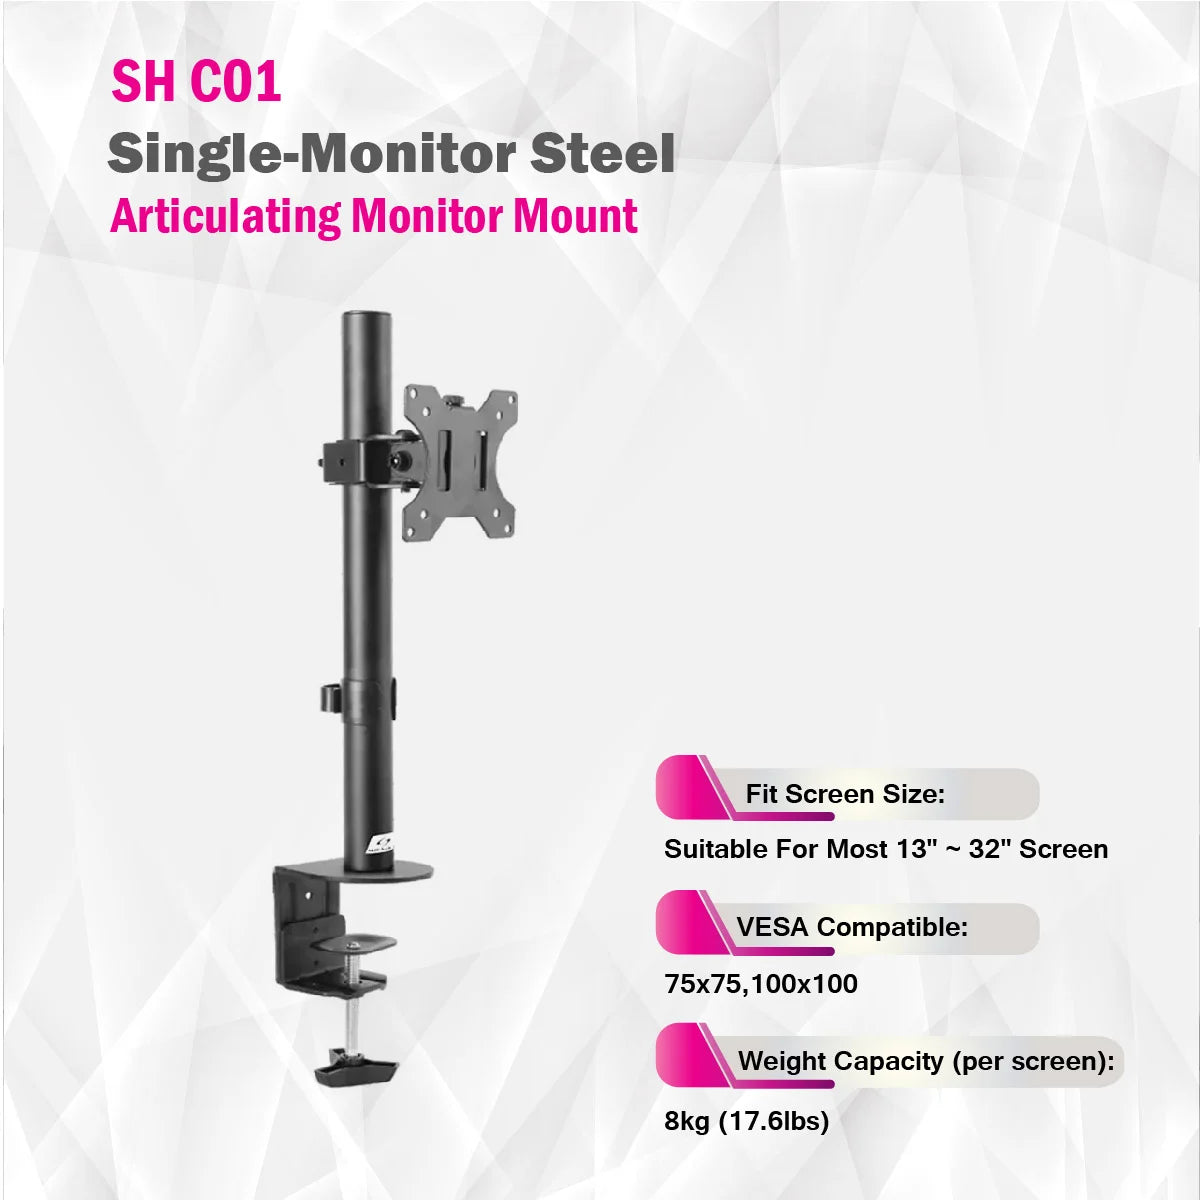 SkillTech -SH C01 - Single-Monitor Steel Articulating Monitor Mount